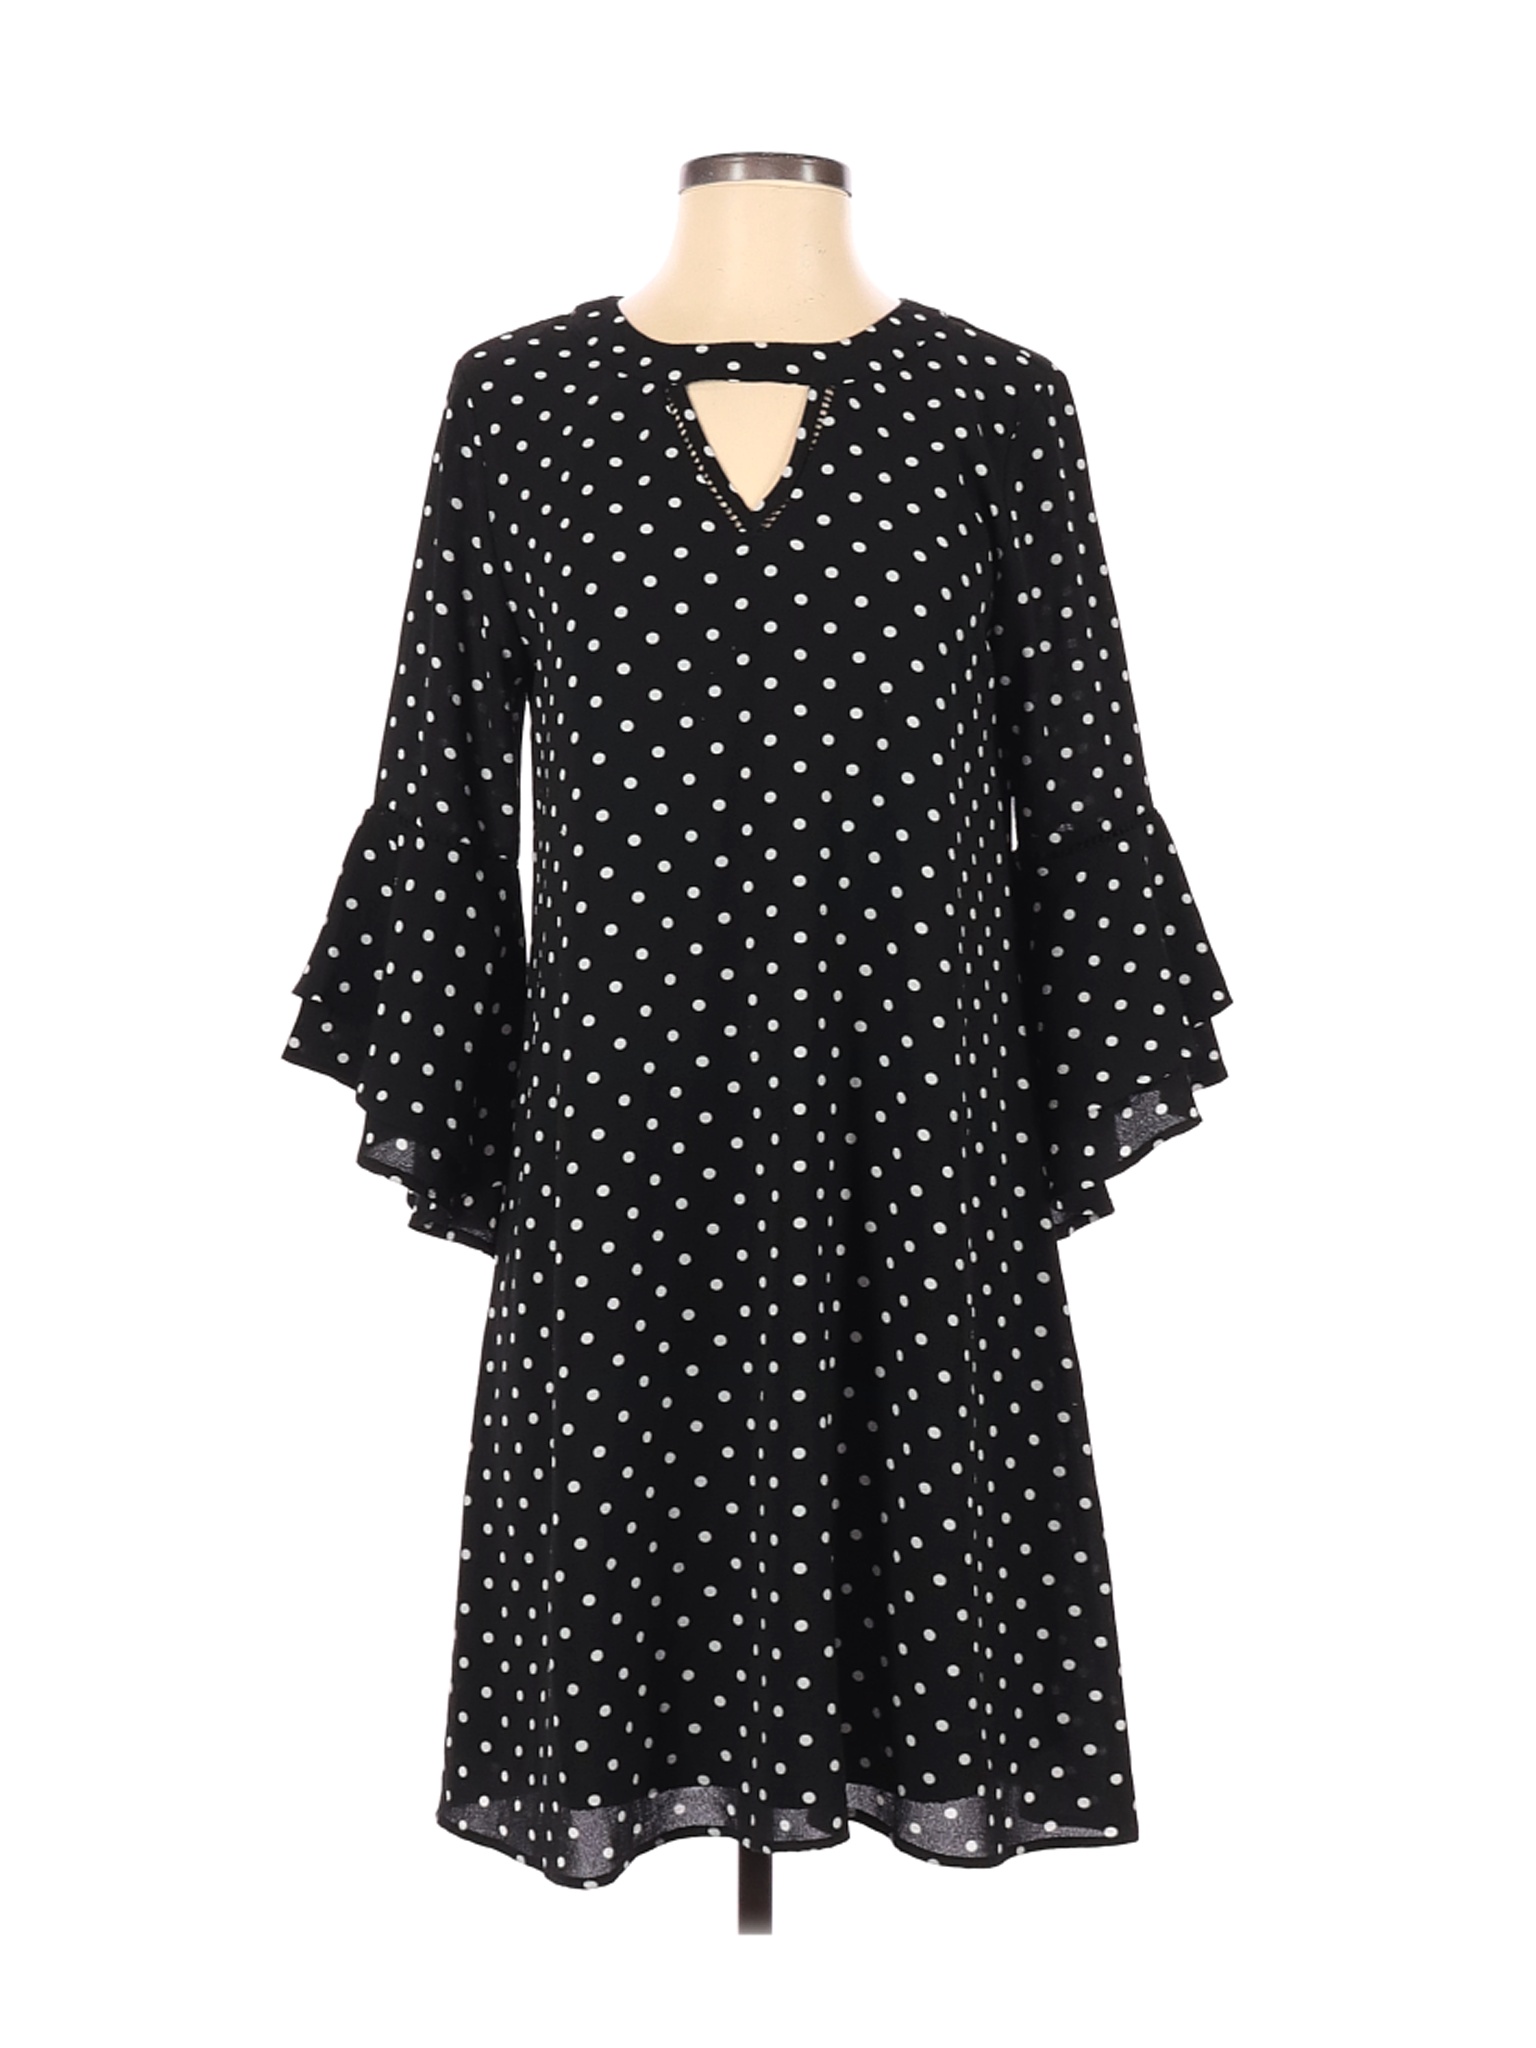 Naif Women Black Casual Dress S | eBay